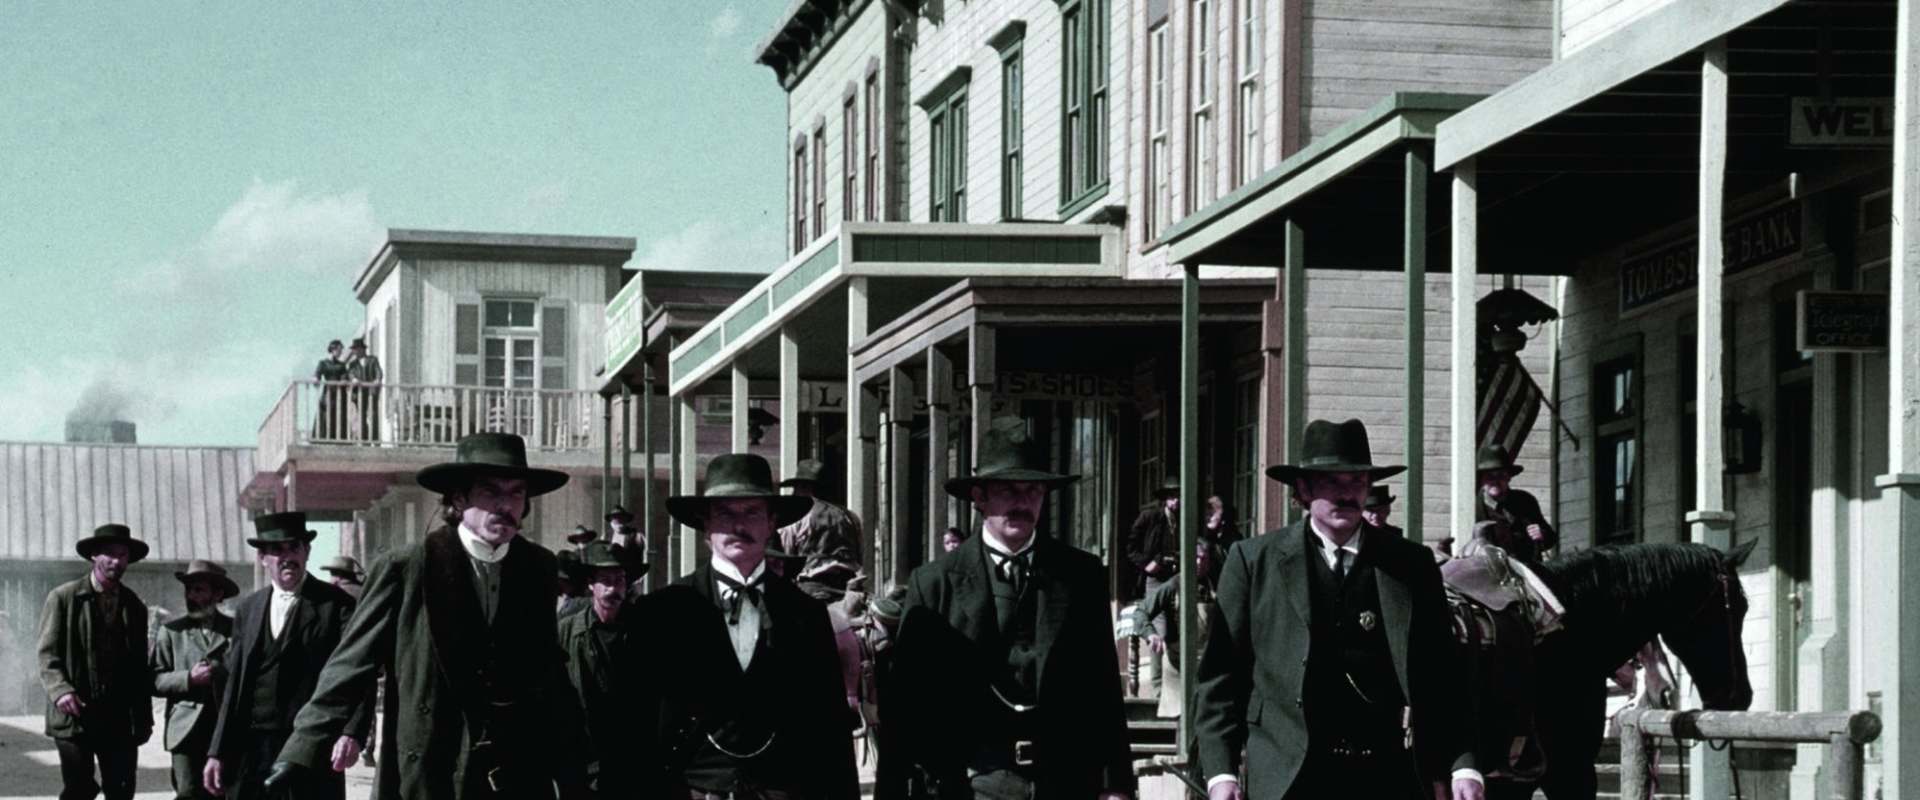 Wyatt Earp background 1